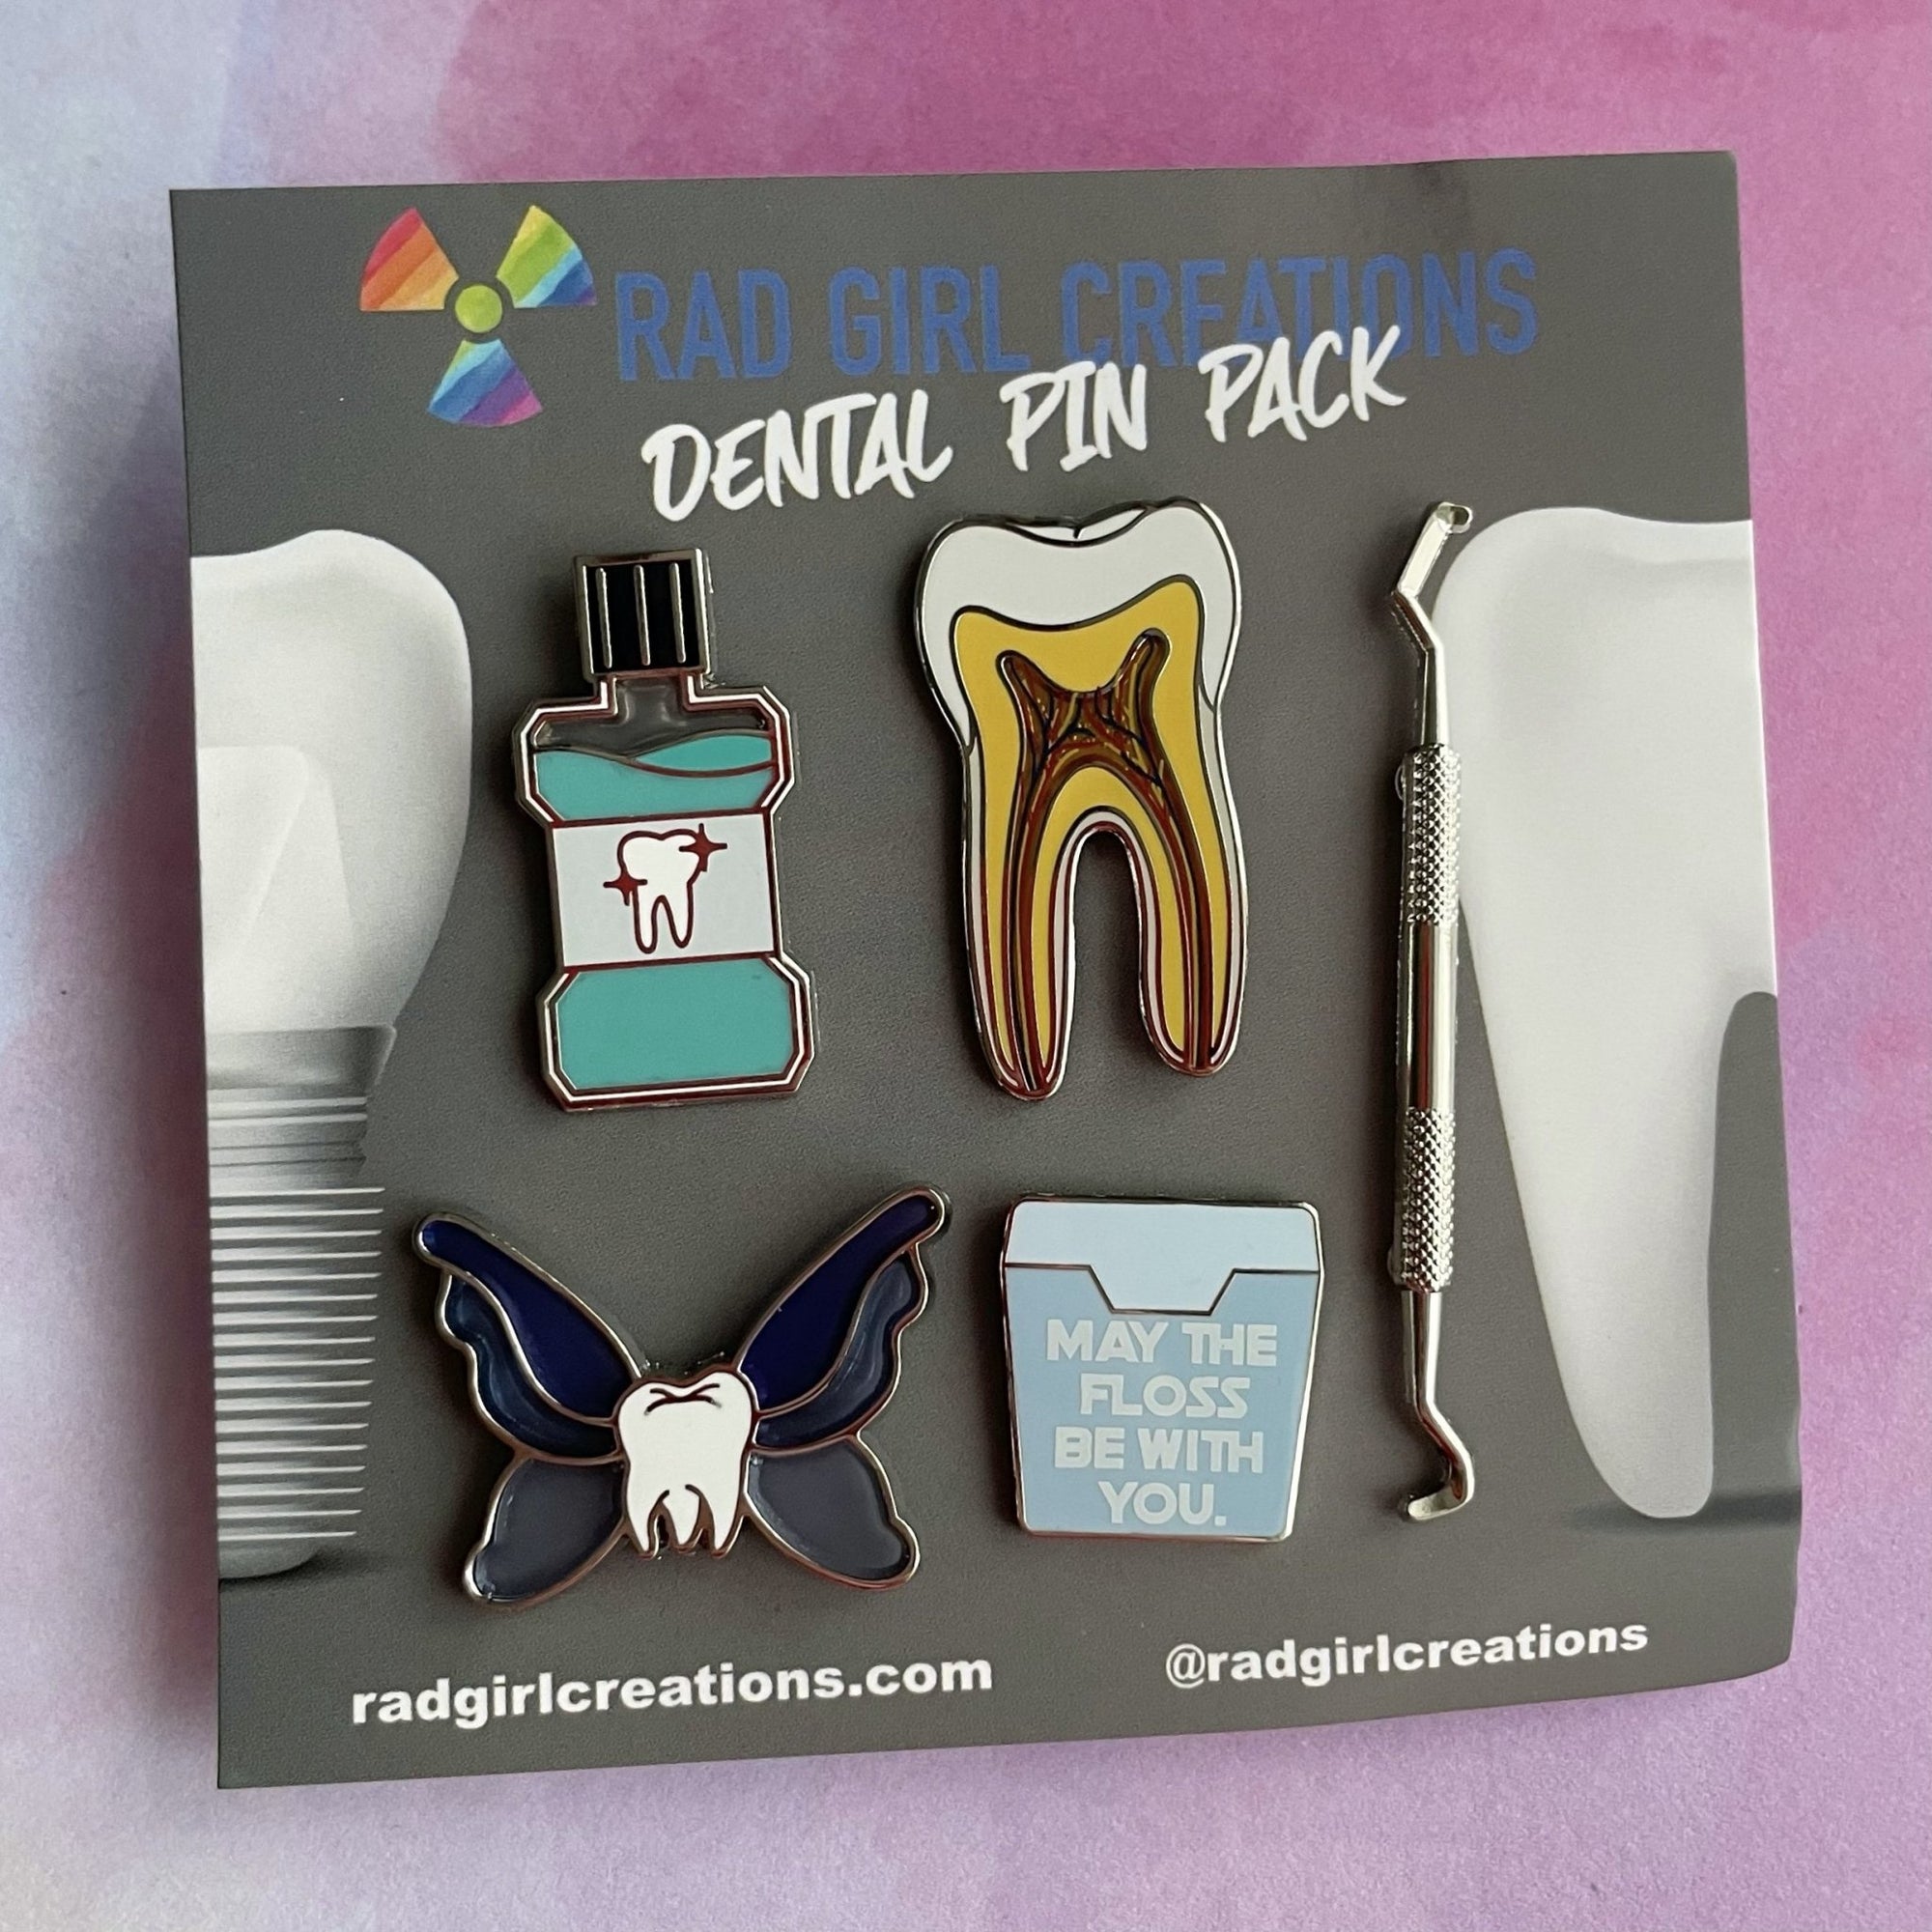 Dental Pin Pack - Rad Girl Creations